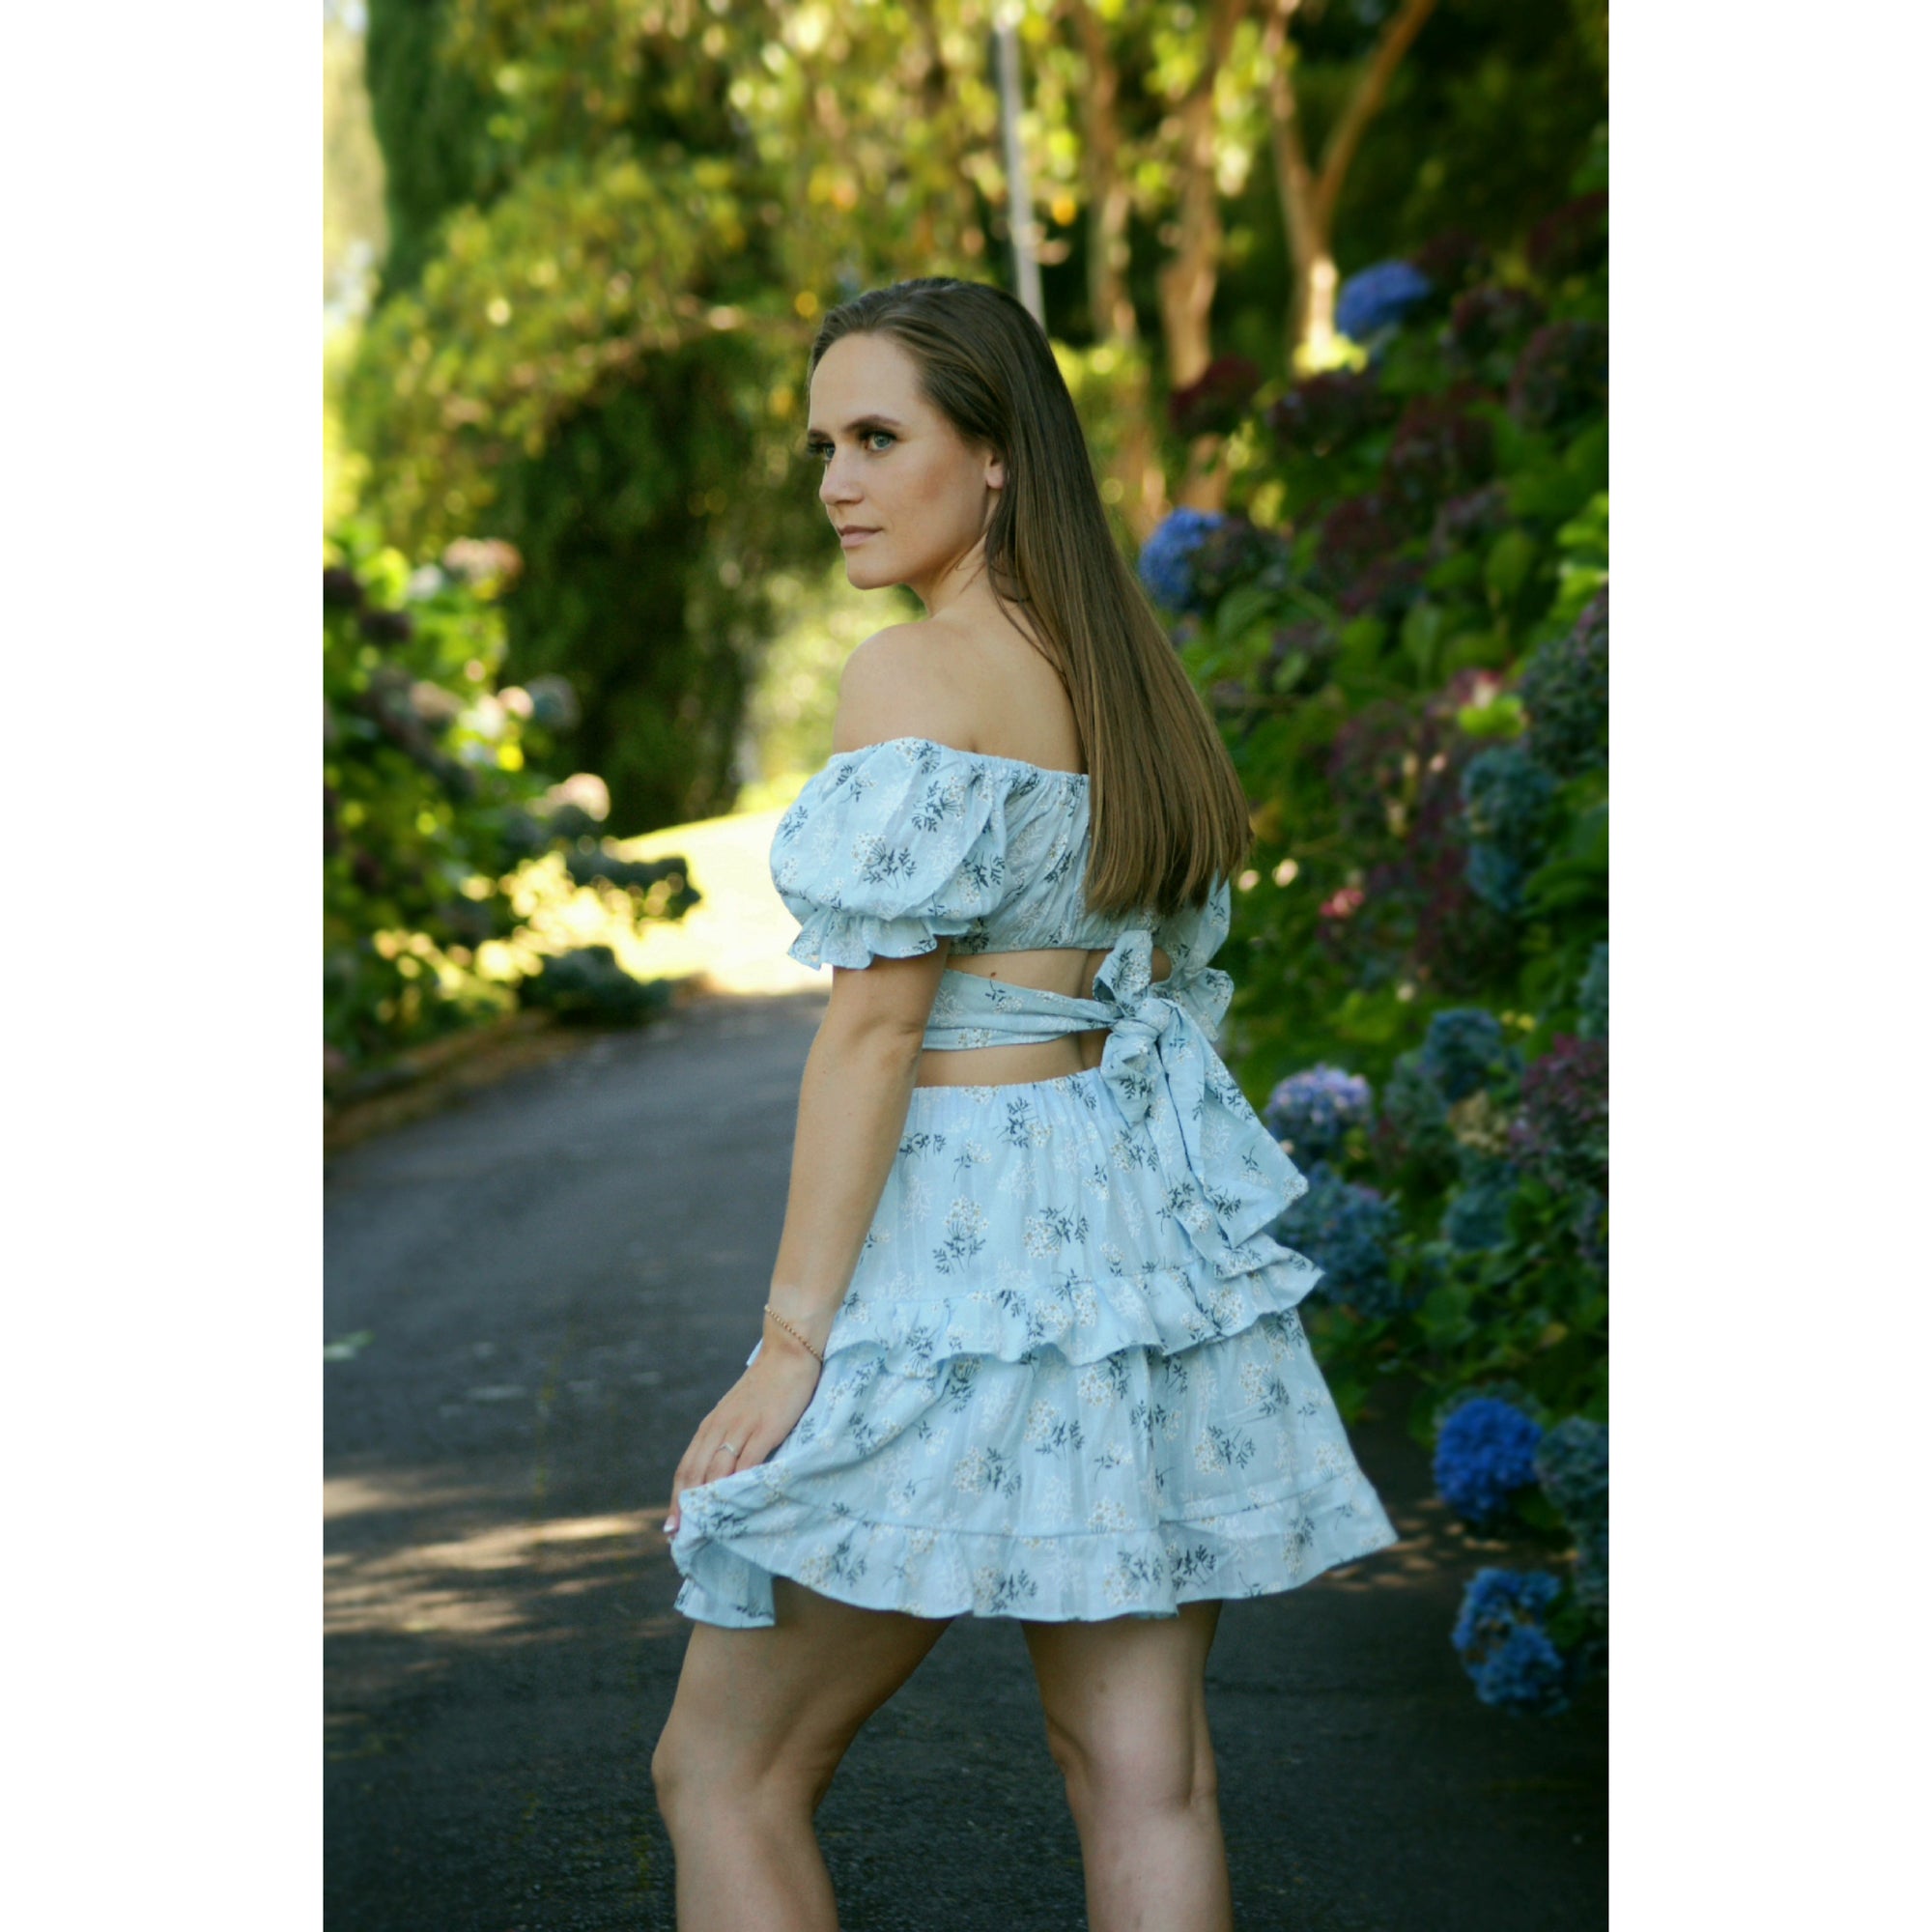 Miller Skirt - Light Blue Floral Not specified